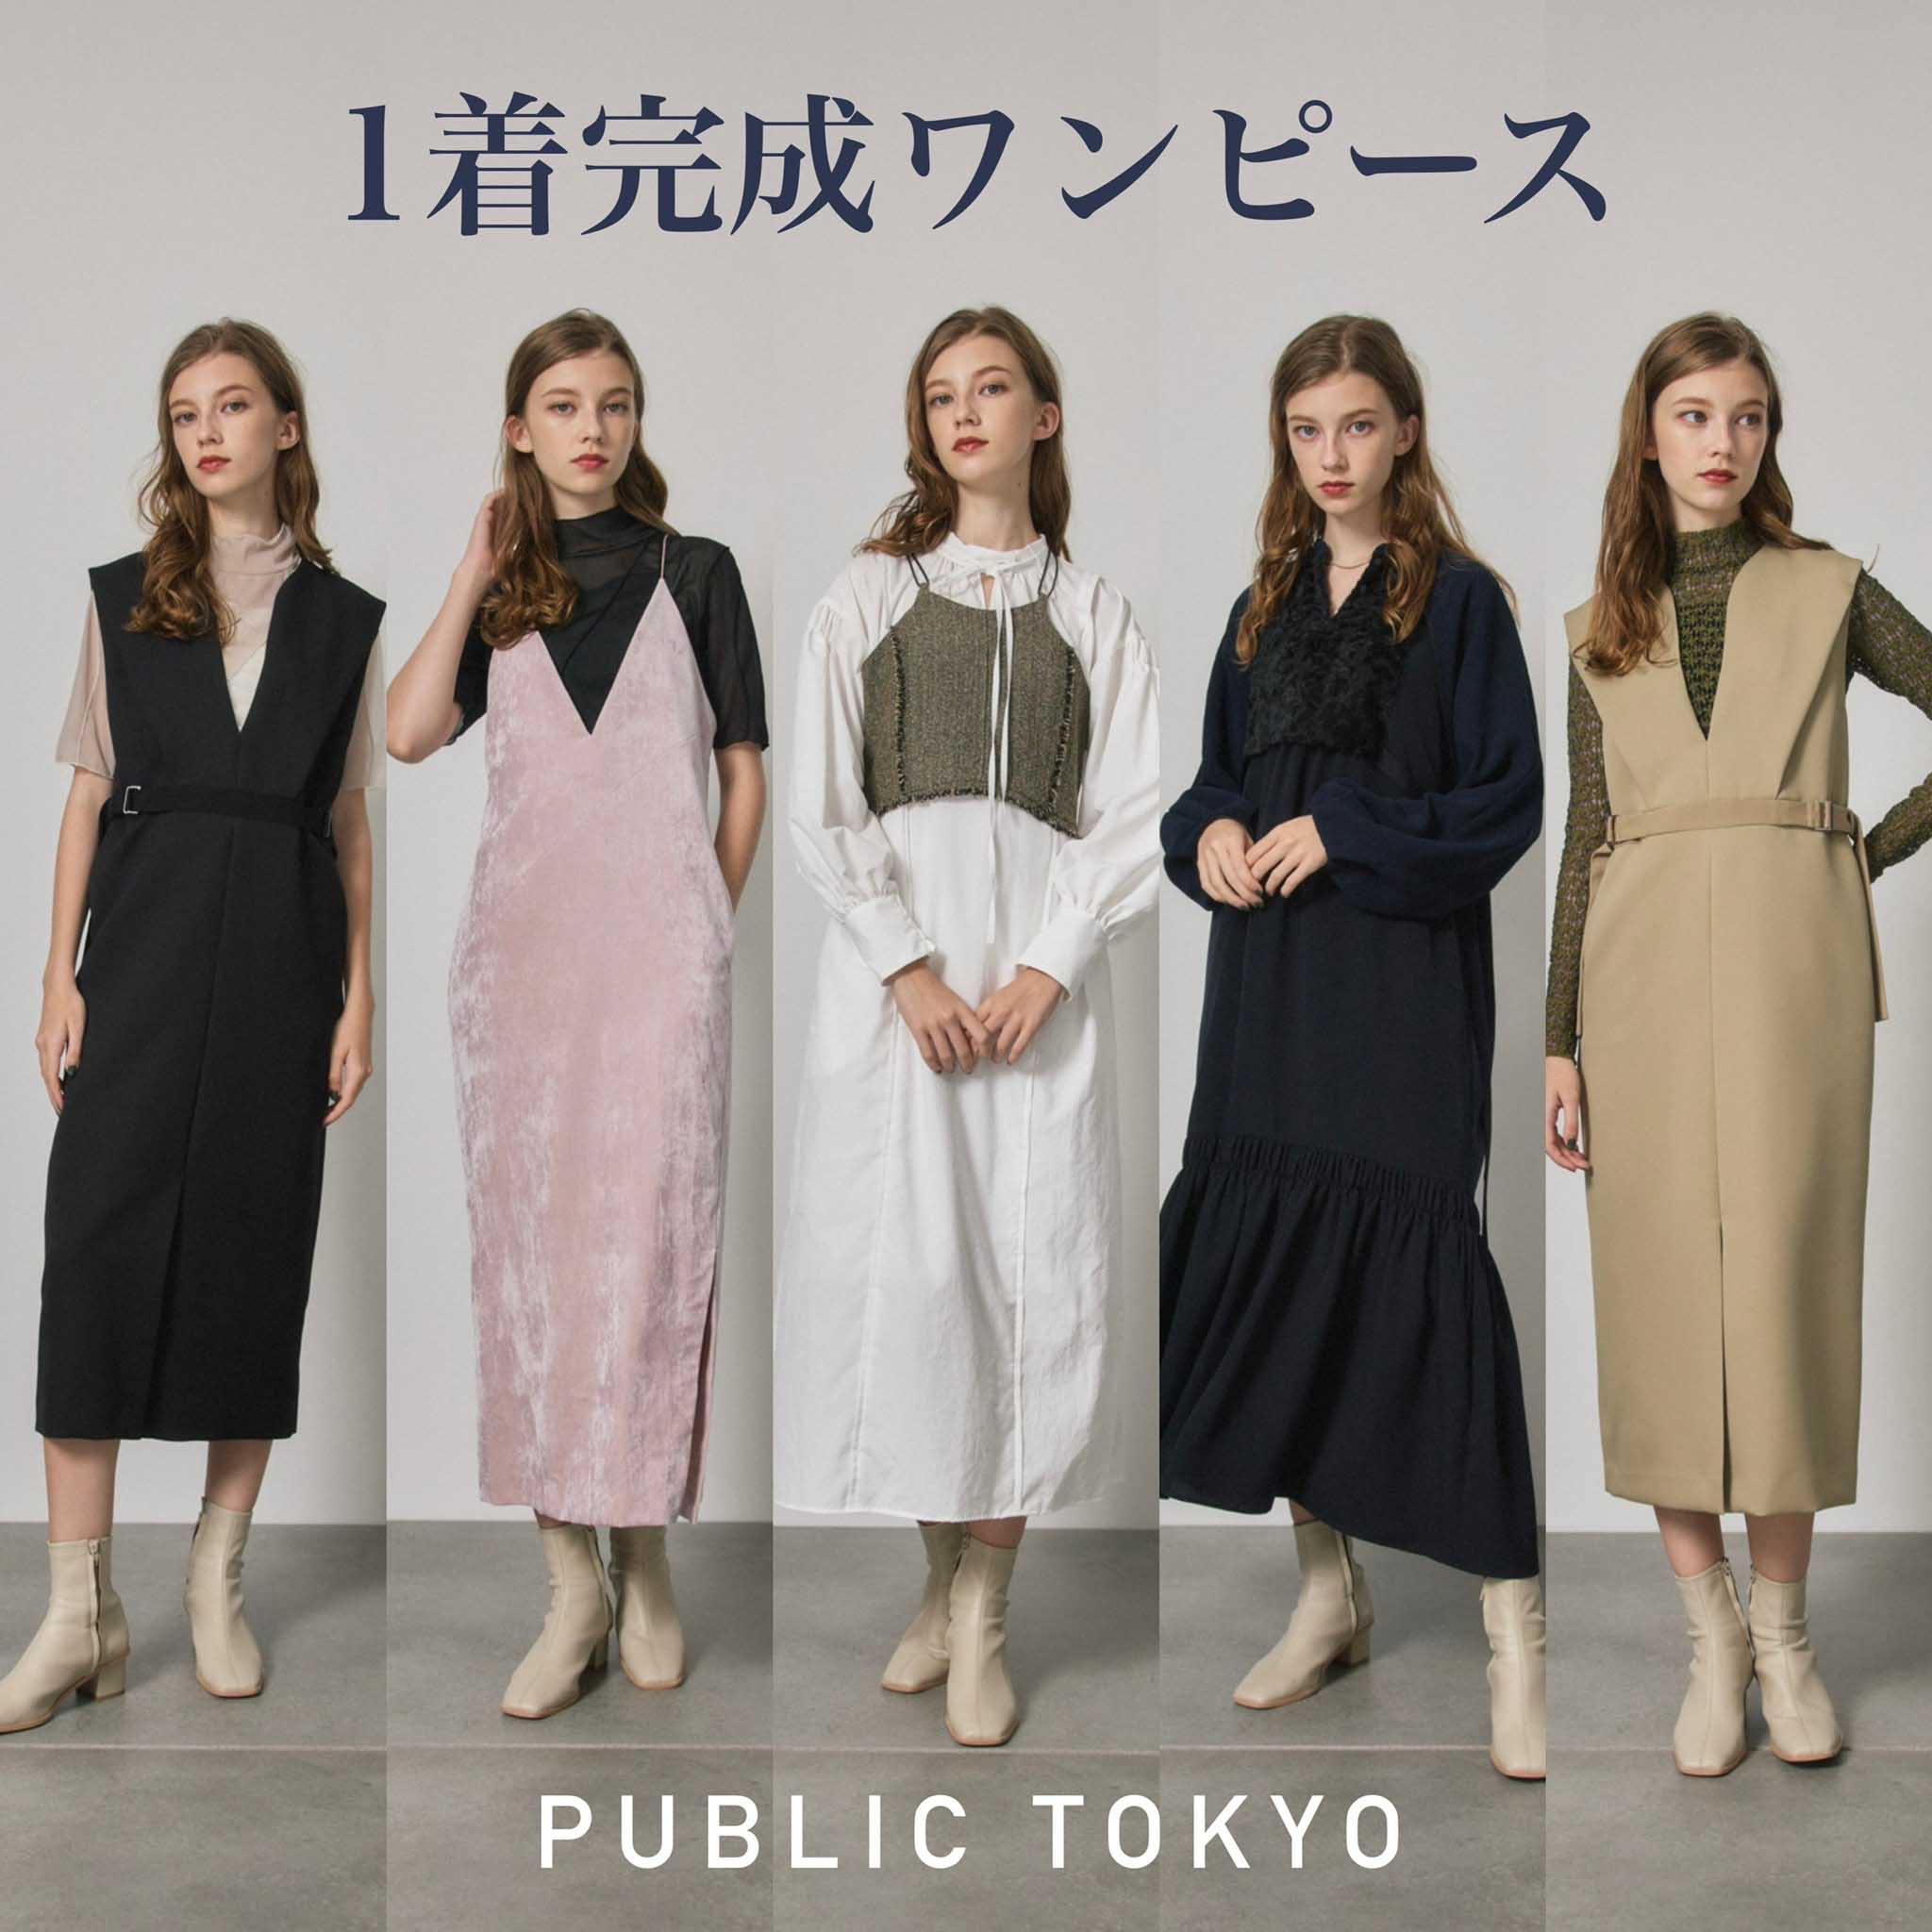 PUBLIC TOKYO(パブリックトーキョー) レディース ワンピース